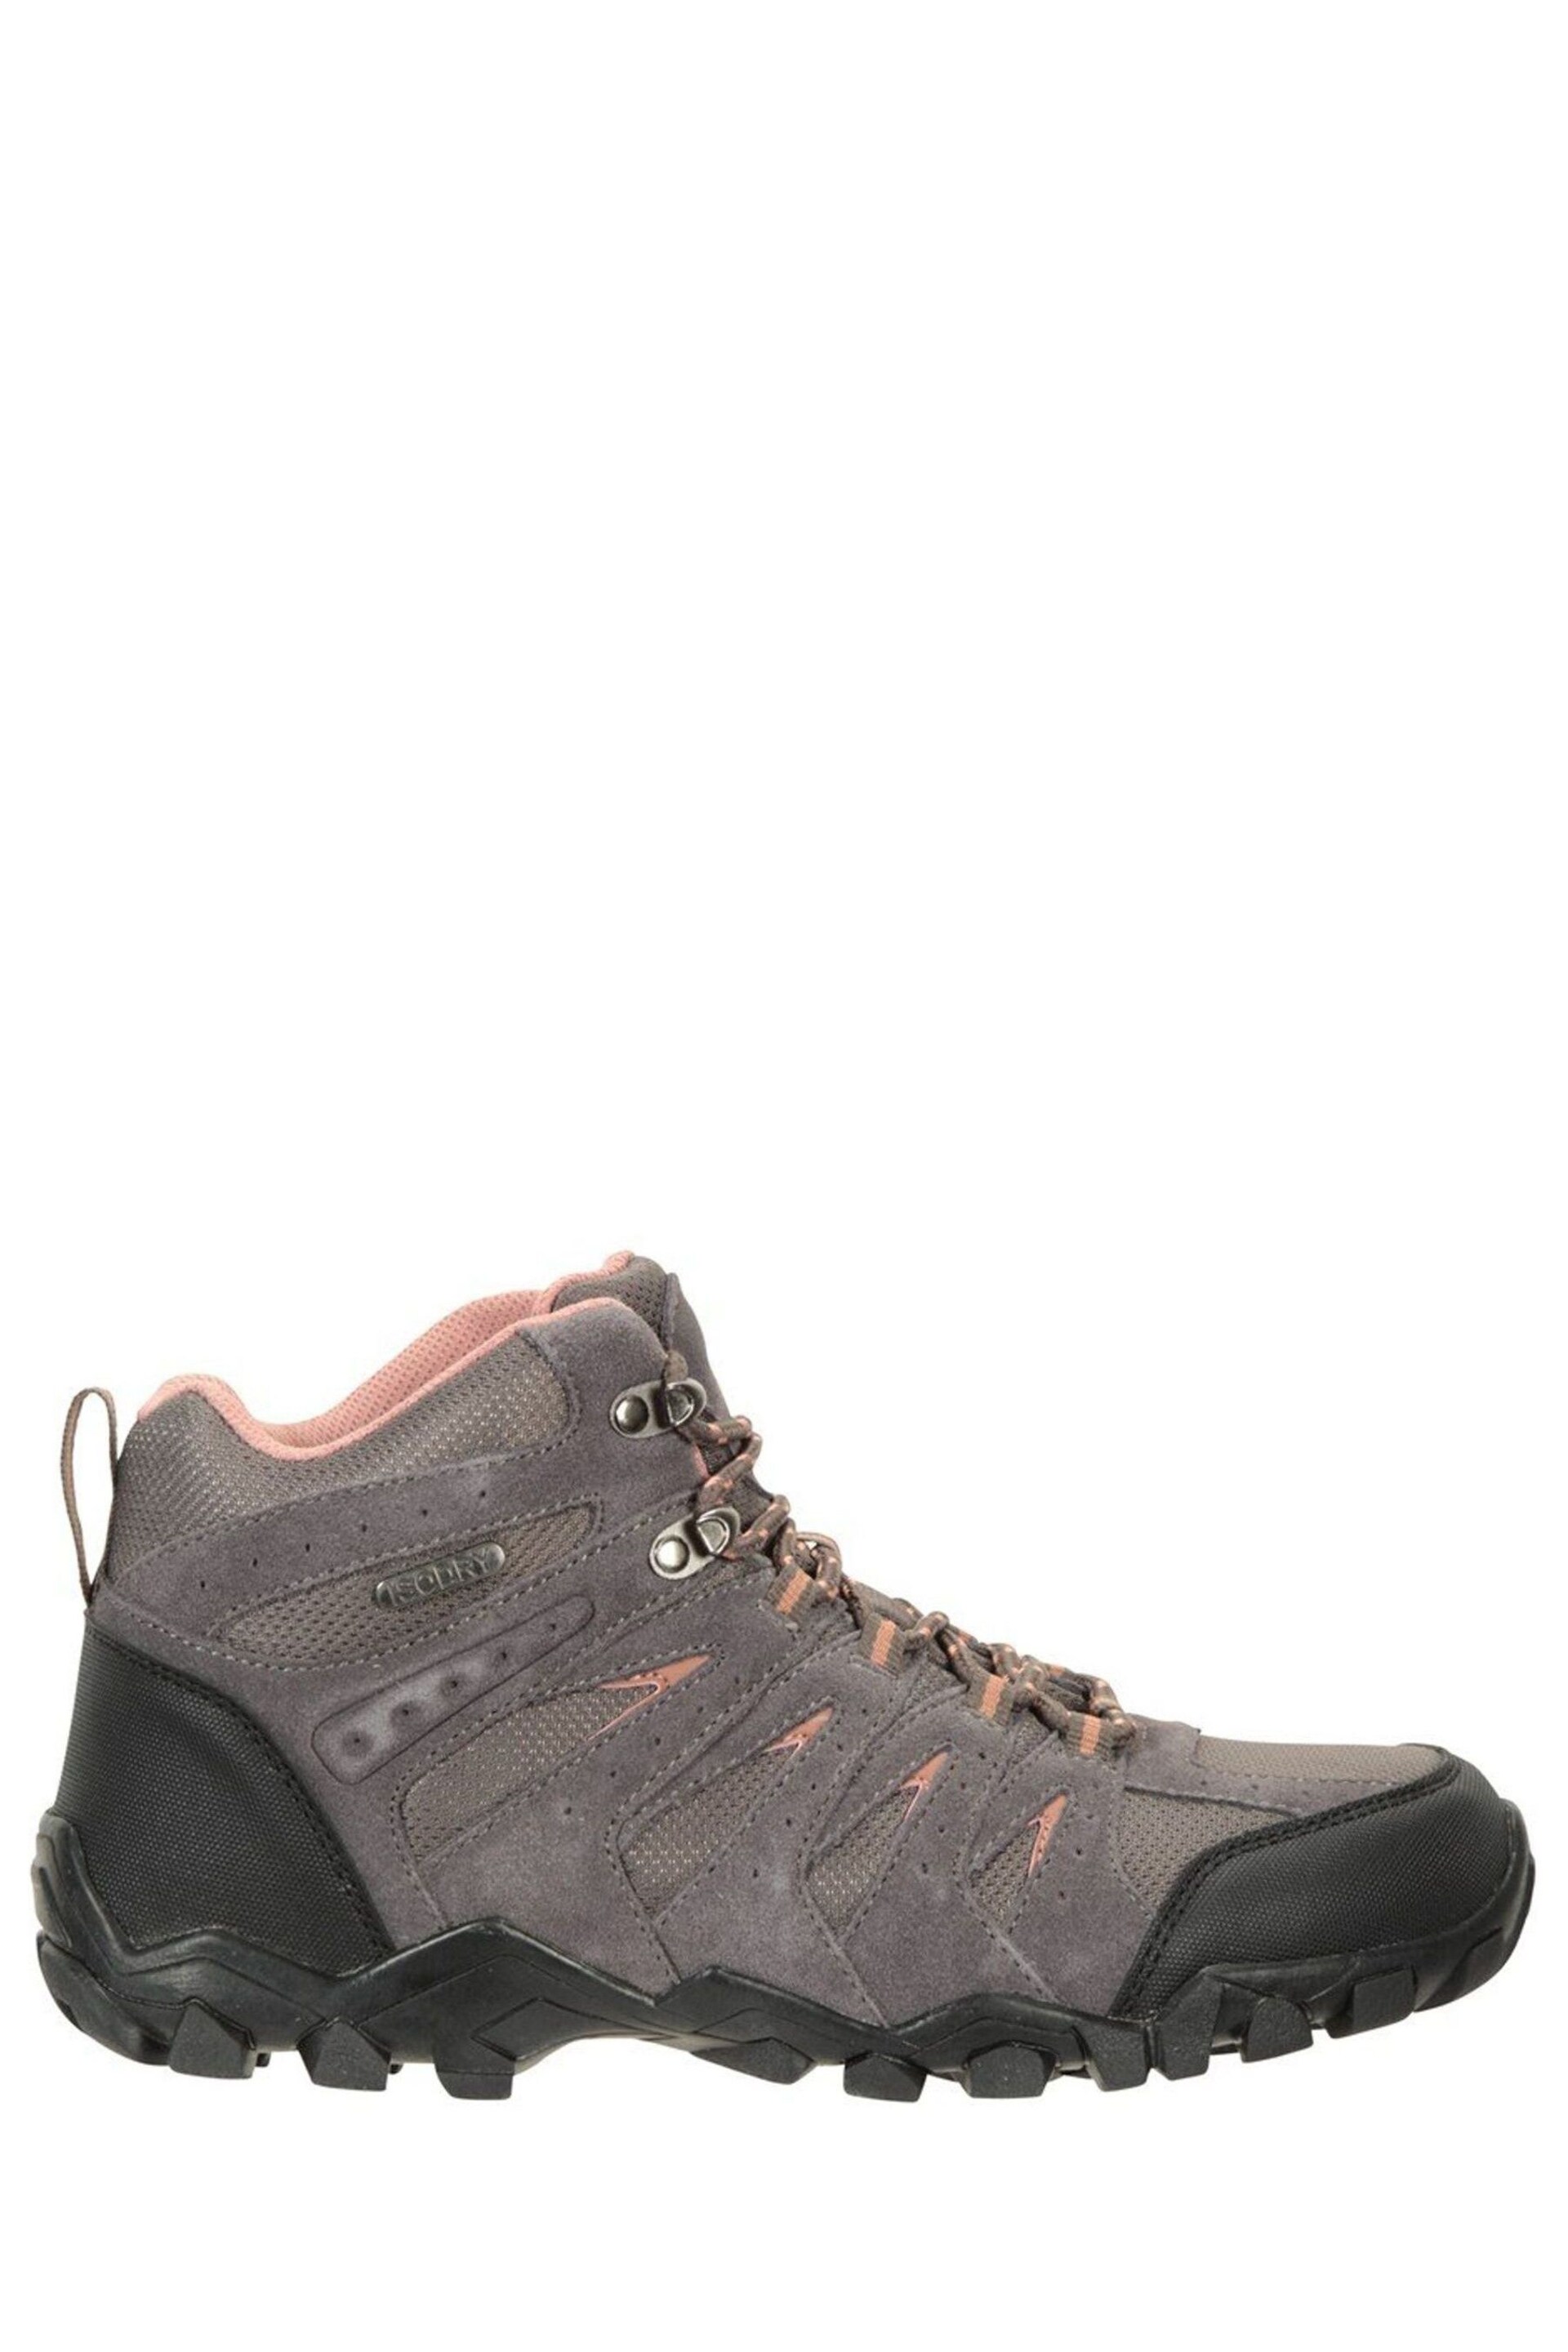 Mountain Warehouse Grey Belfour Womens Waterproof, Lightweight Walking Boots - Image 2 of 4